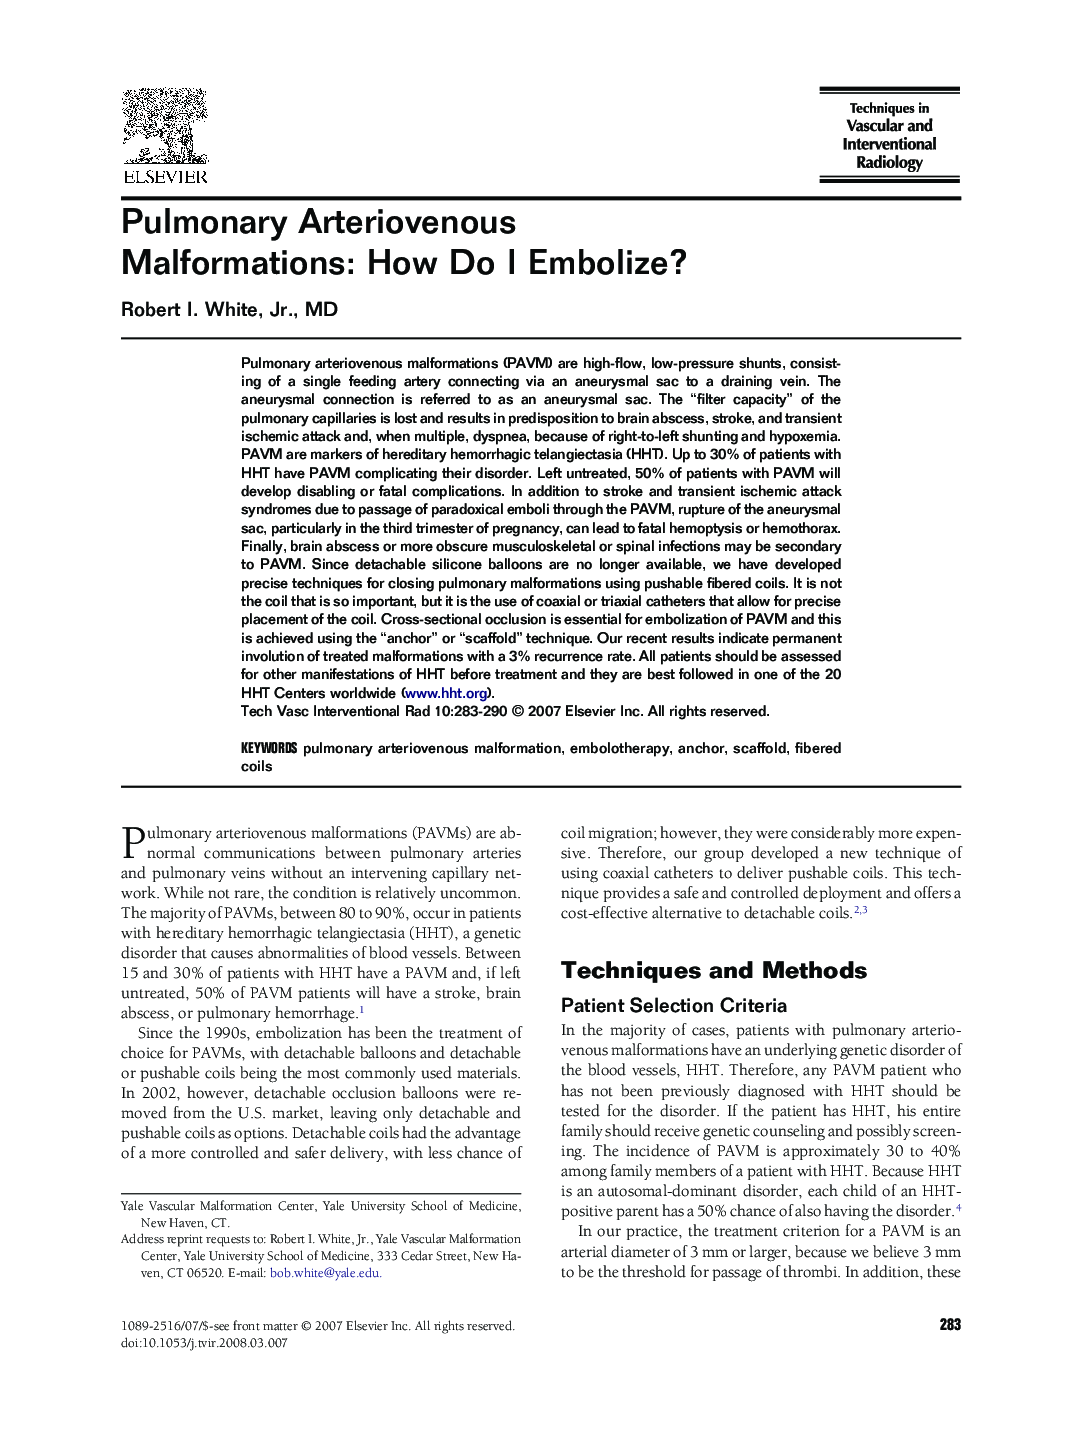 Pulmonary Arteriovenous Malformations: How Do I Embolize?